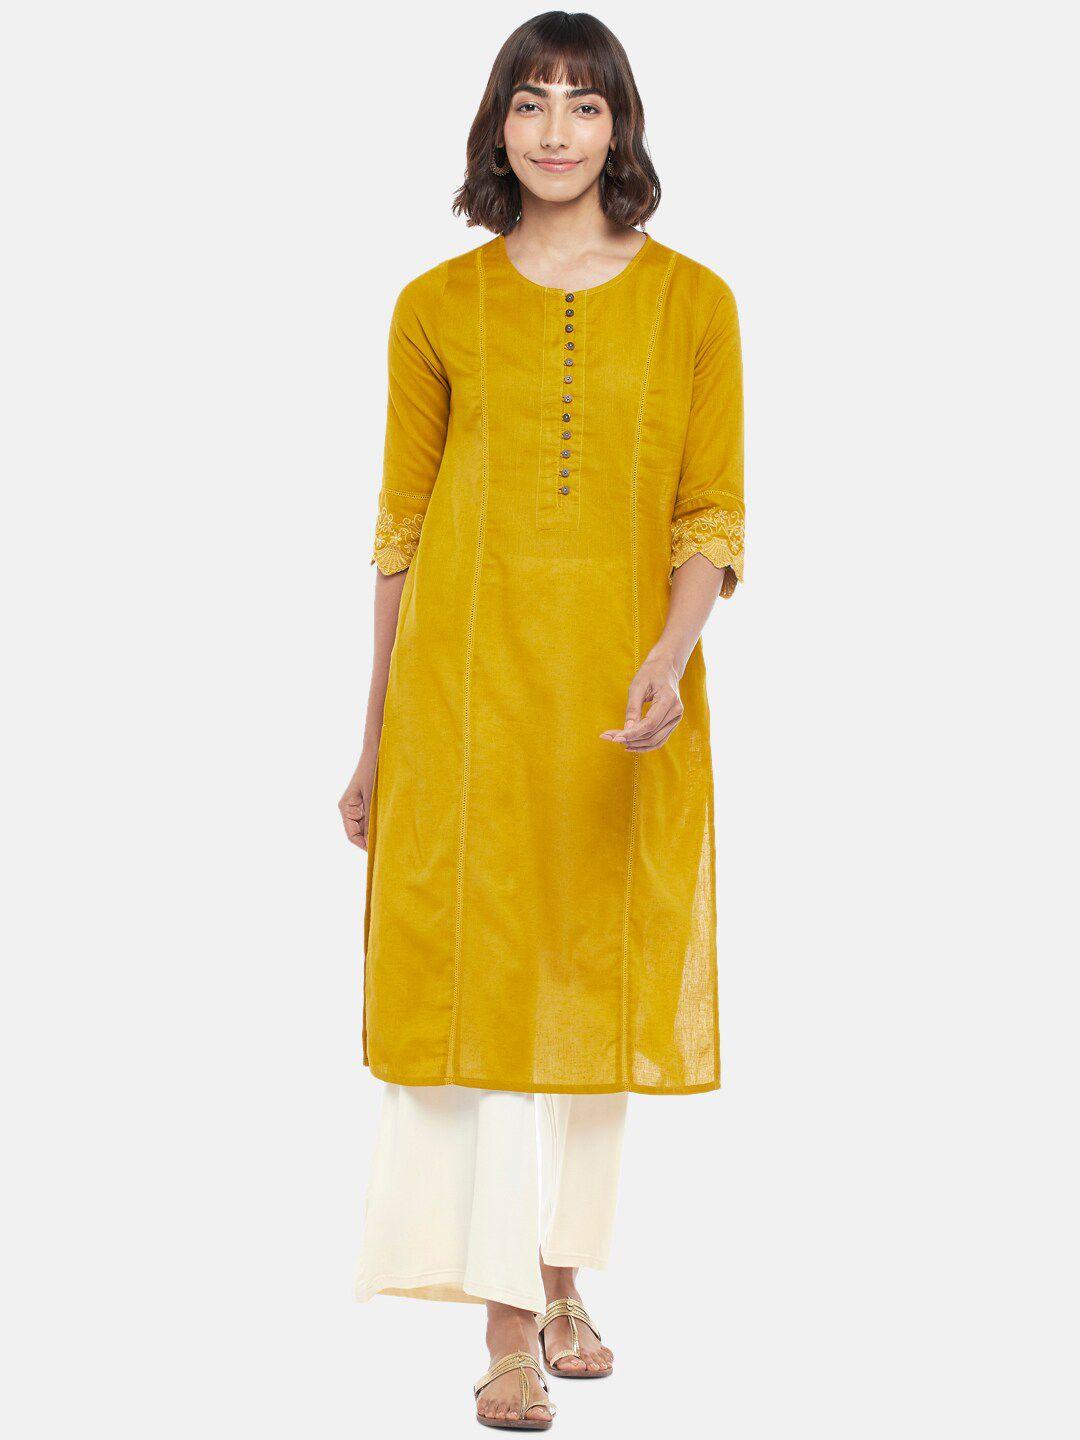 rangmanch by pantaloons women mustard yellow thread work kurta